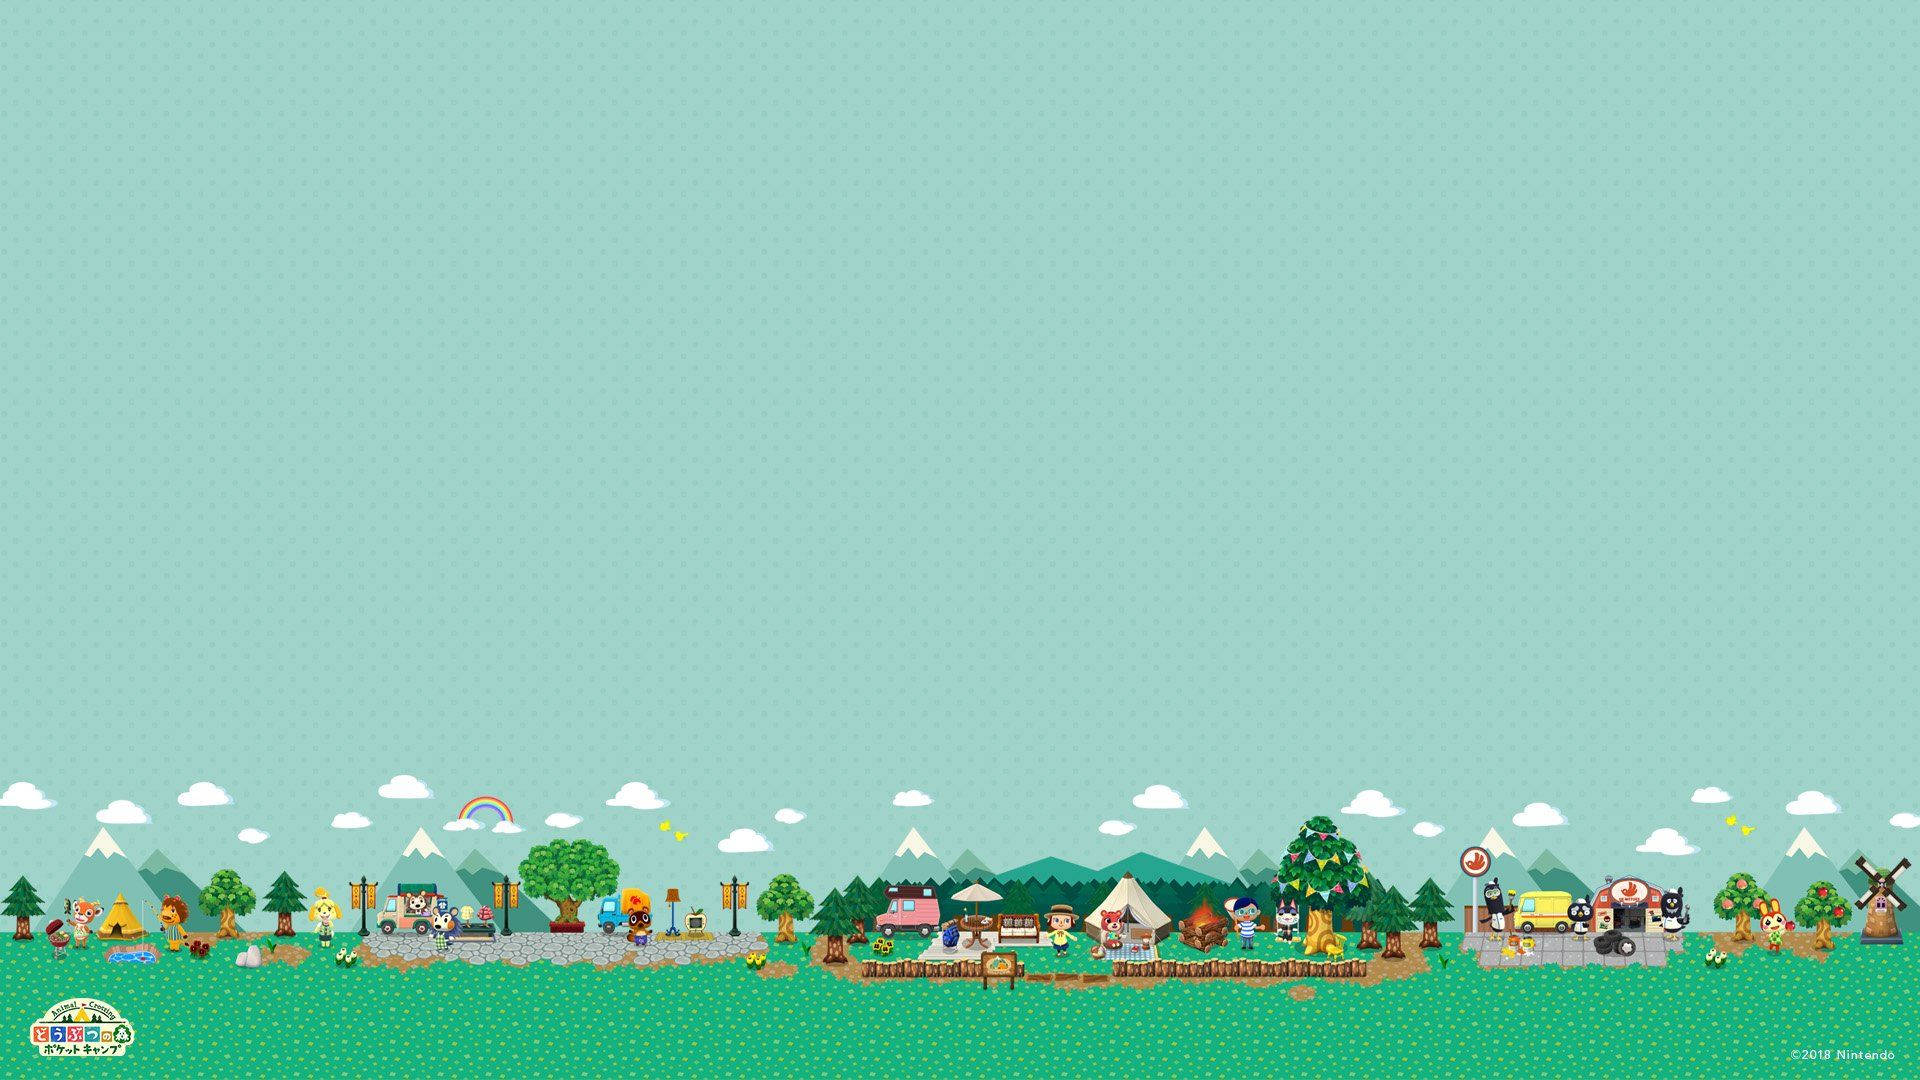 Free Animal Crossing Wallpaper Downloads, Animal Crossing Wallpaper for FREE